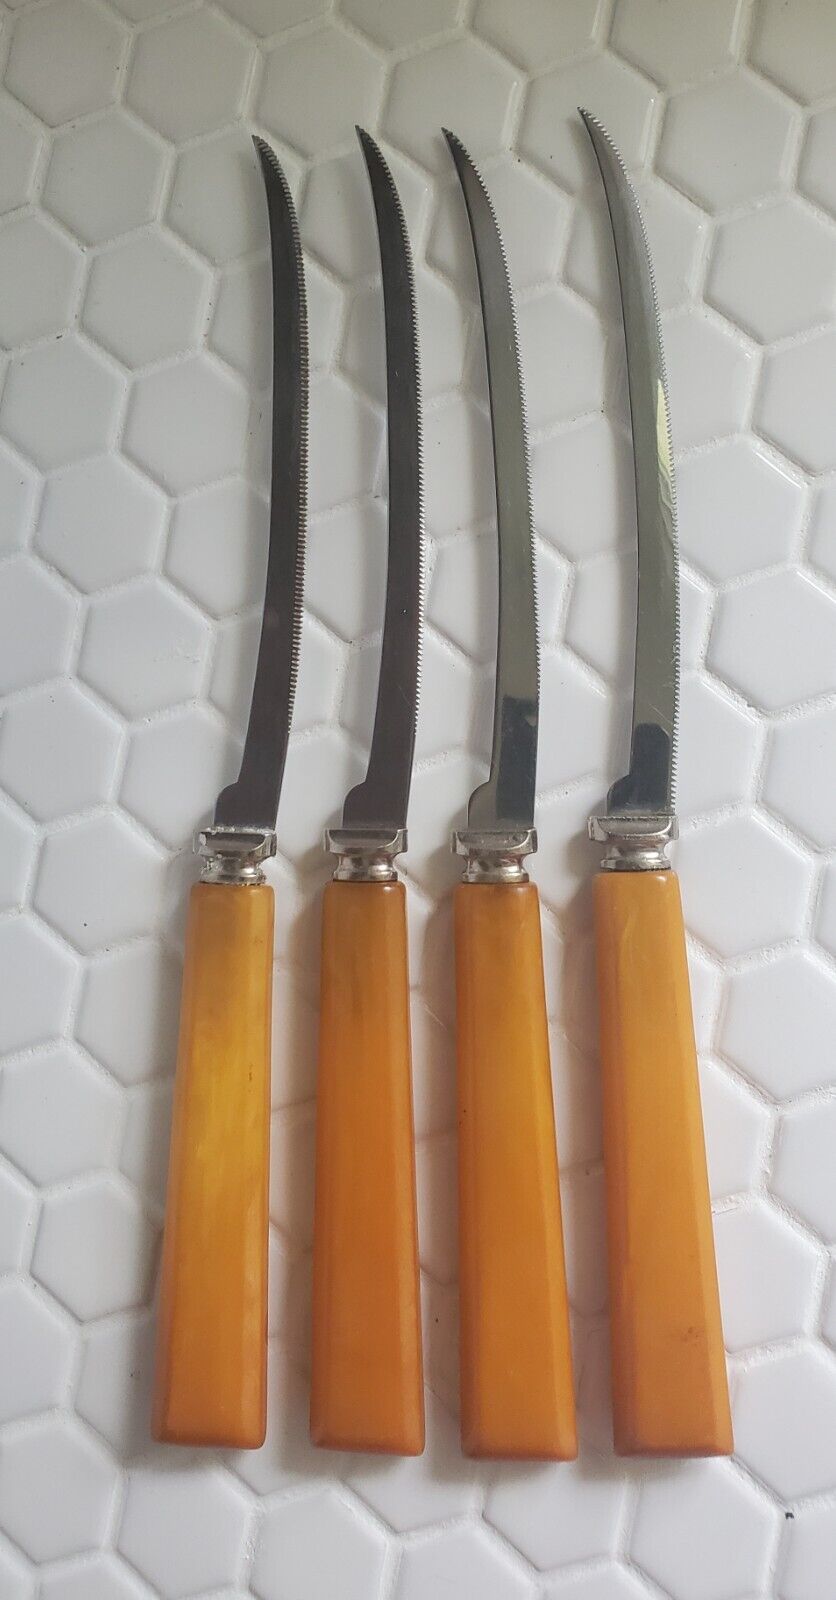 4 Vintage Henry’s Stainless Steel Tomato/Steak Knives Butterscotch Bakelite